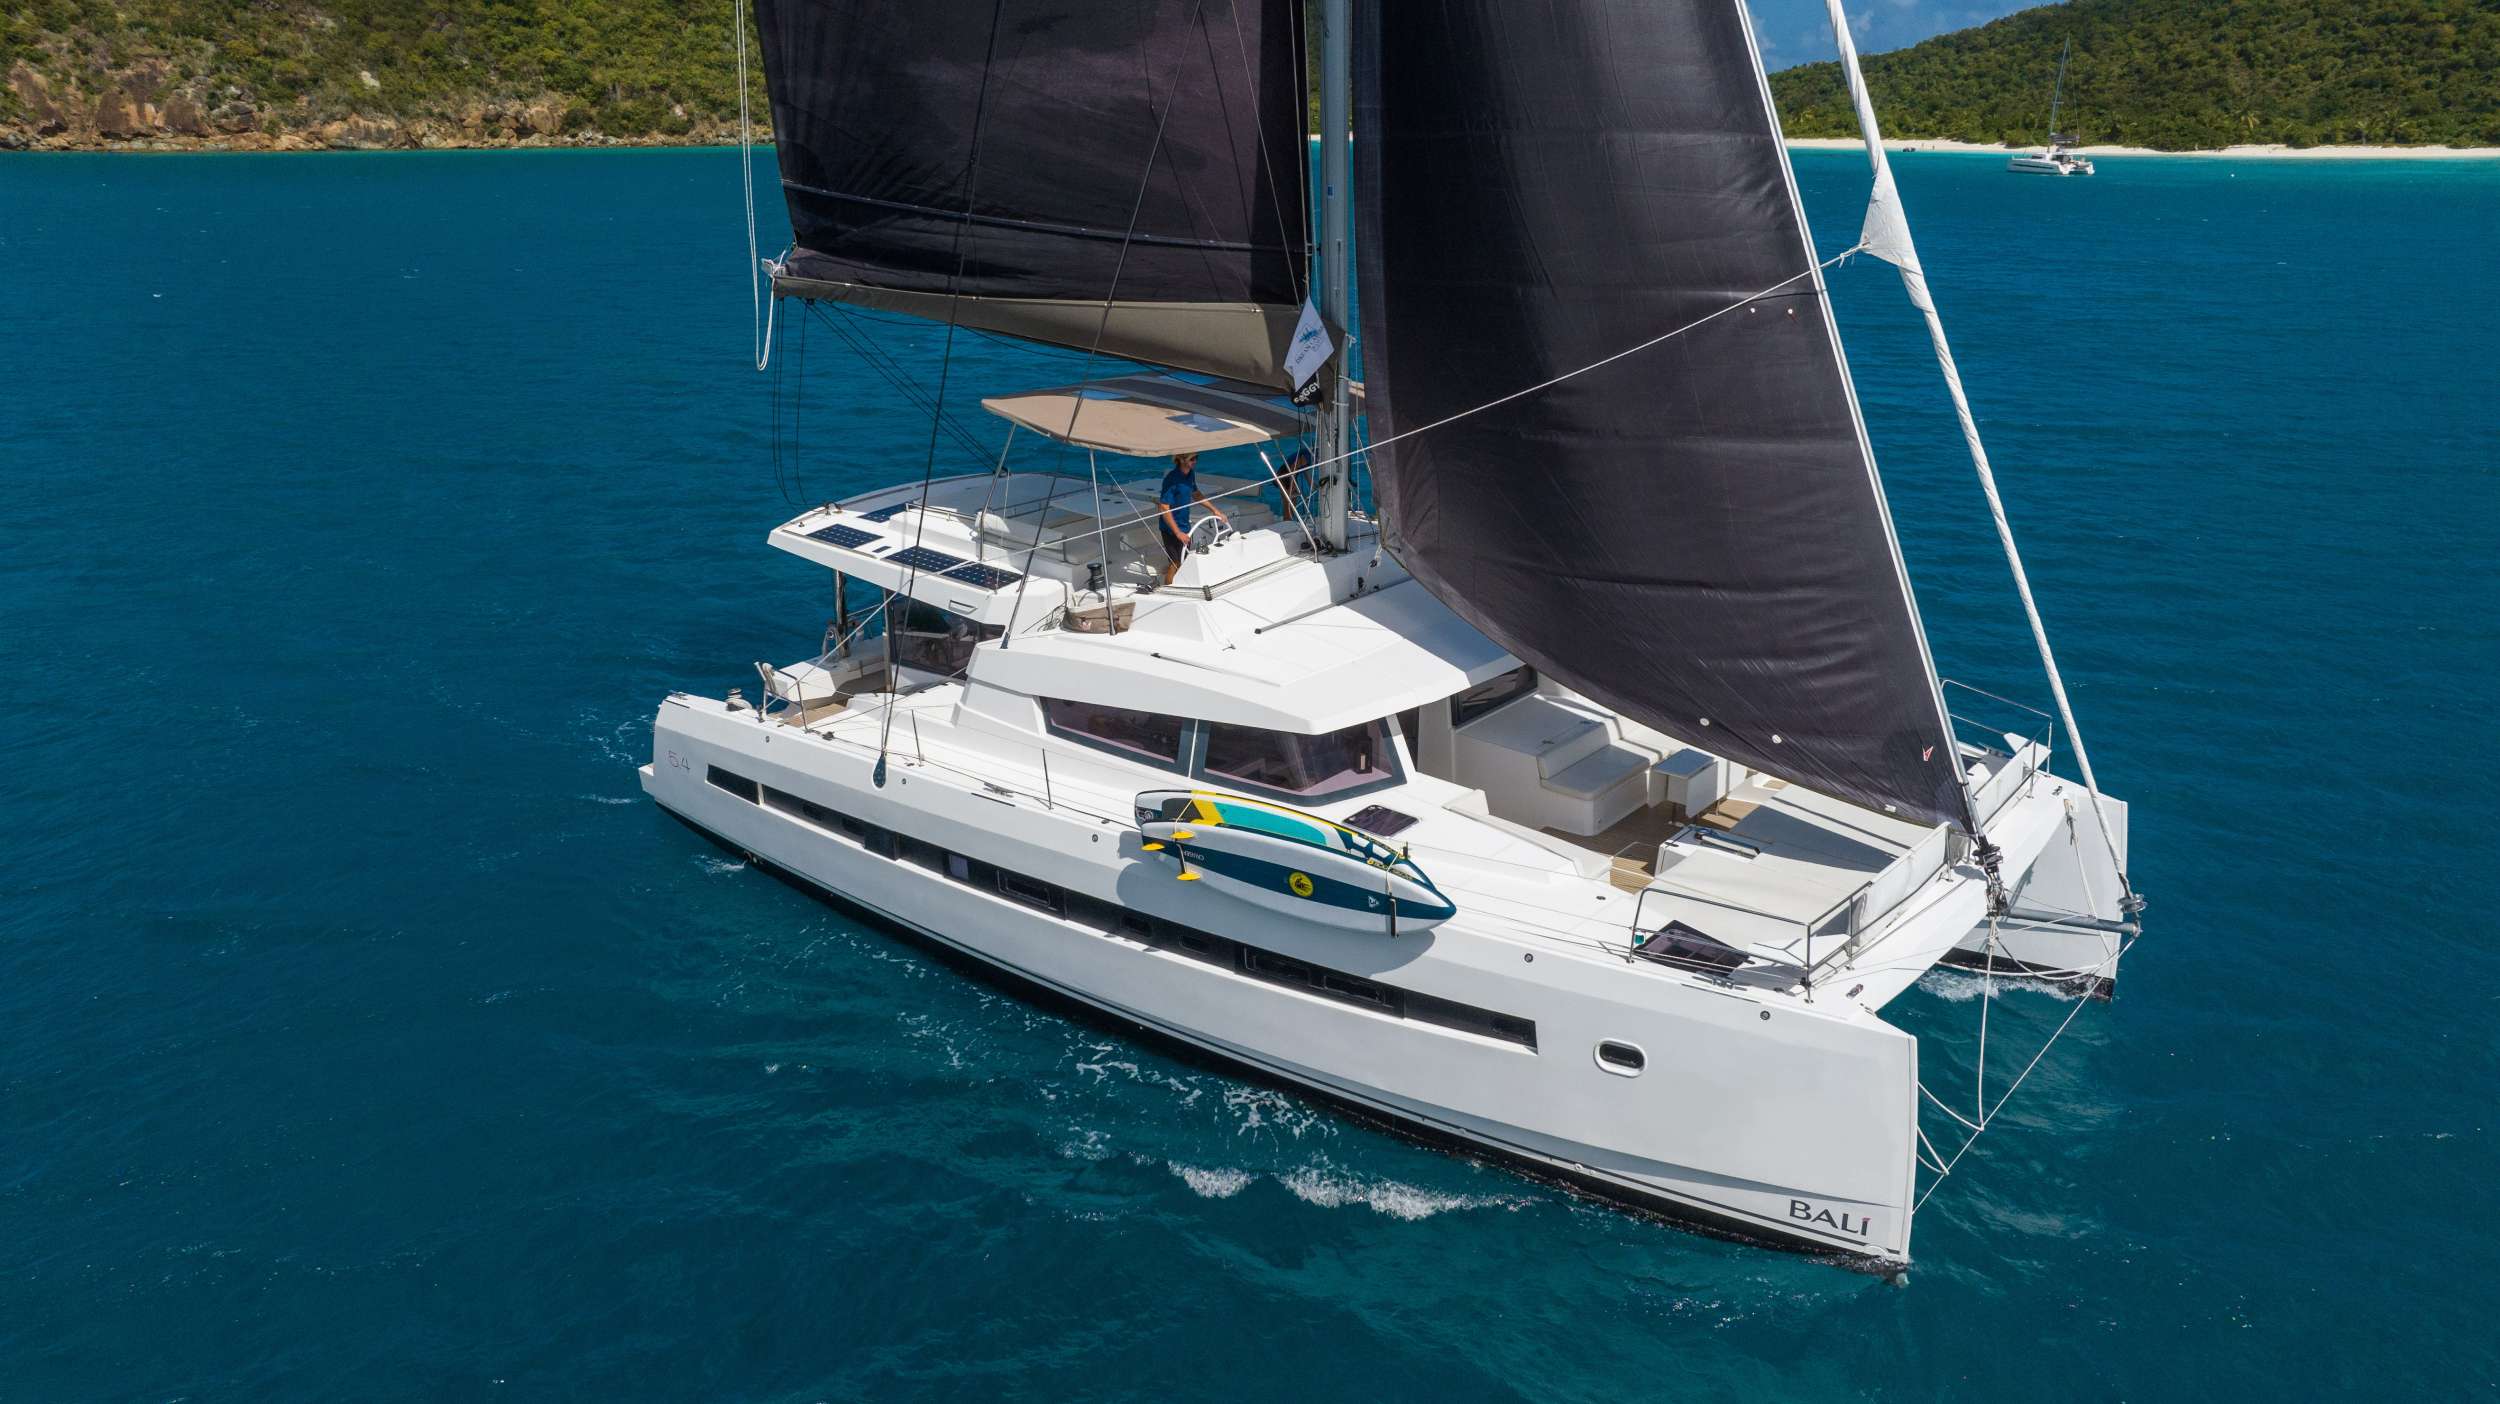 SUN DAZE 5.4 - Luxury yacht charter Grenada & Boat hire in Caribbean 1